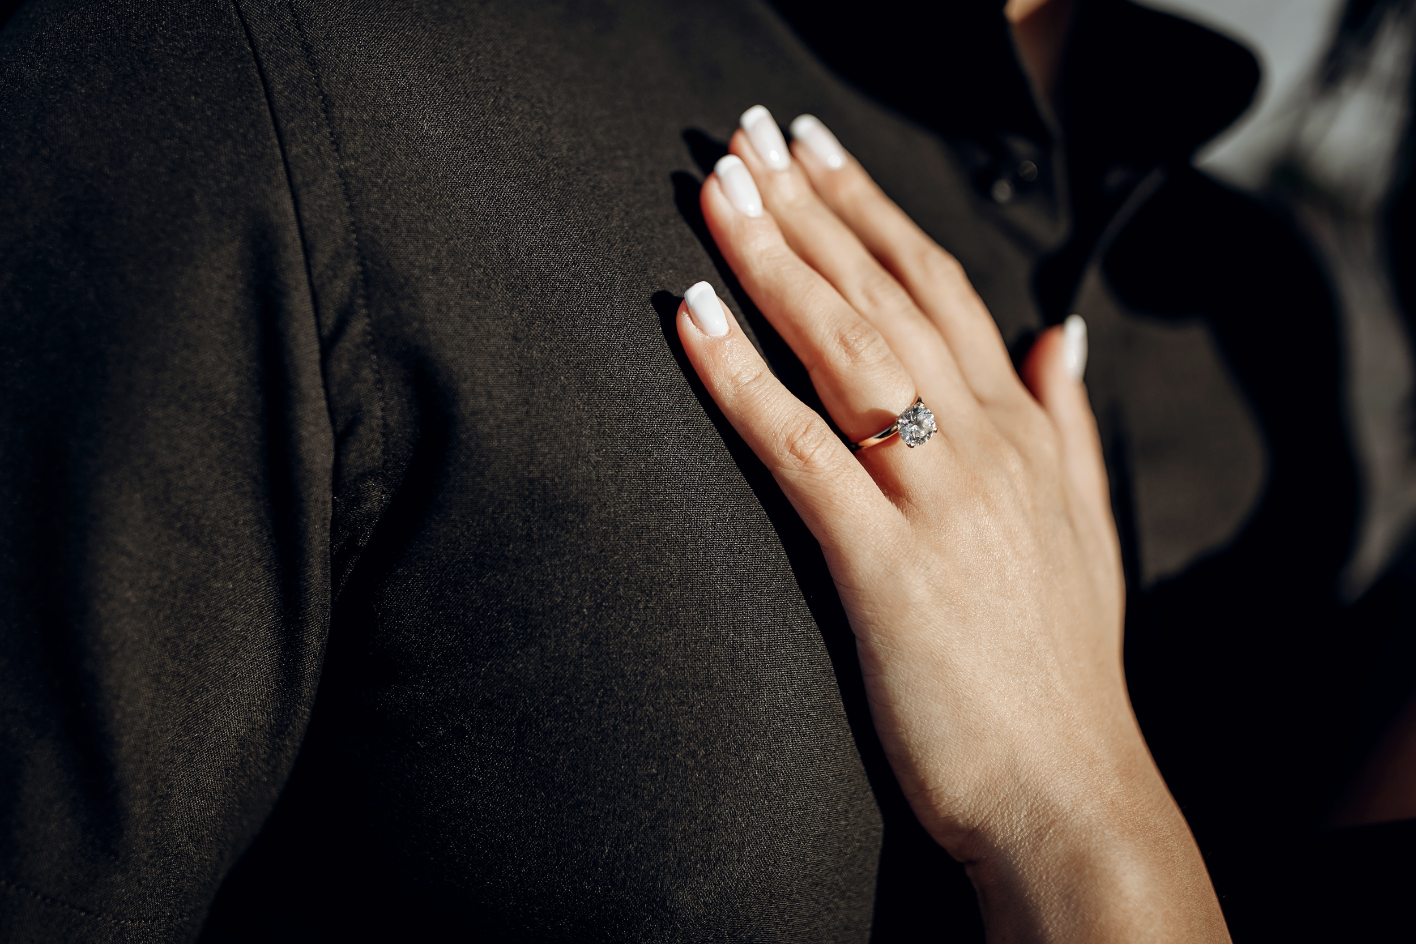 Mano de mujer con un anillo de compromiso | Foto: Shutterstock